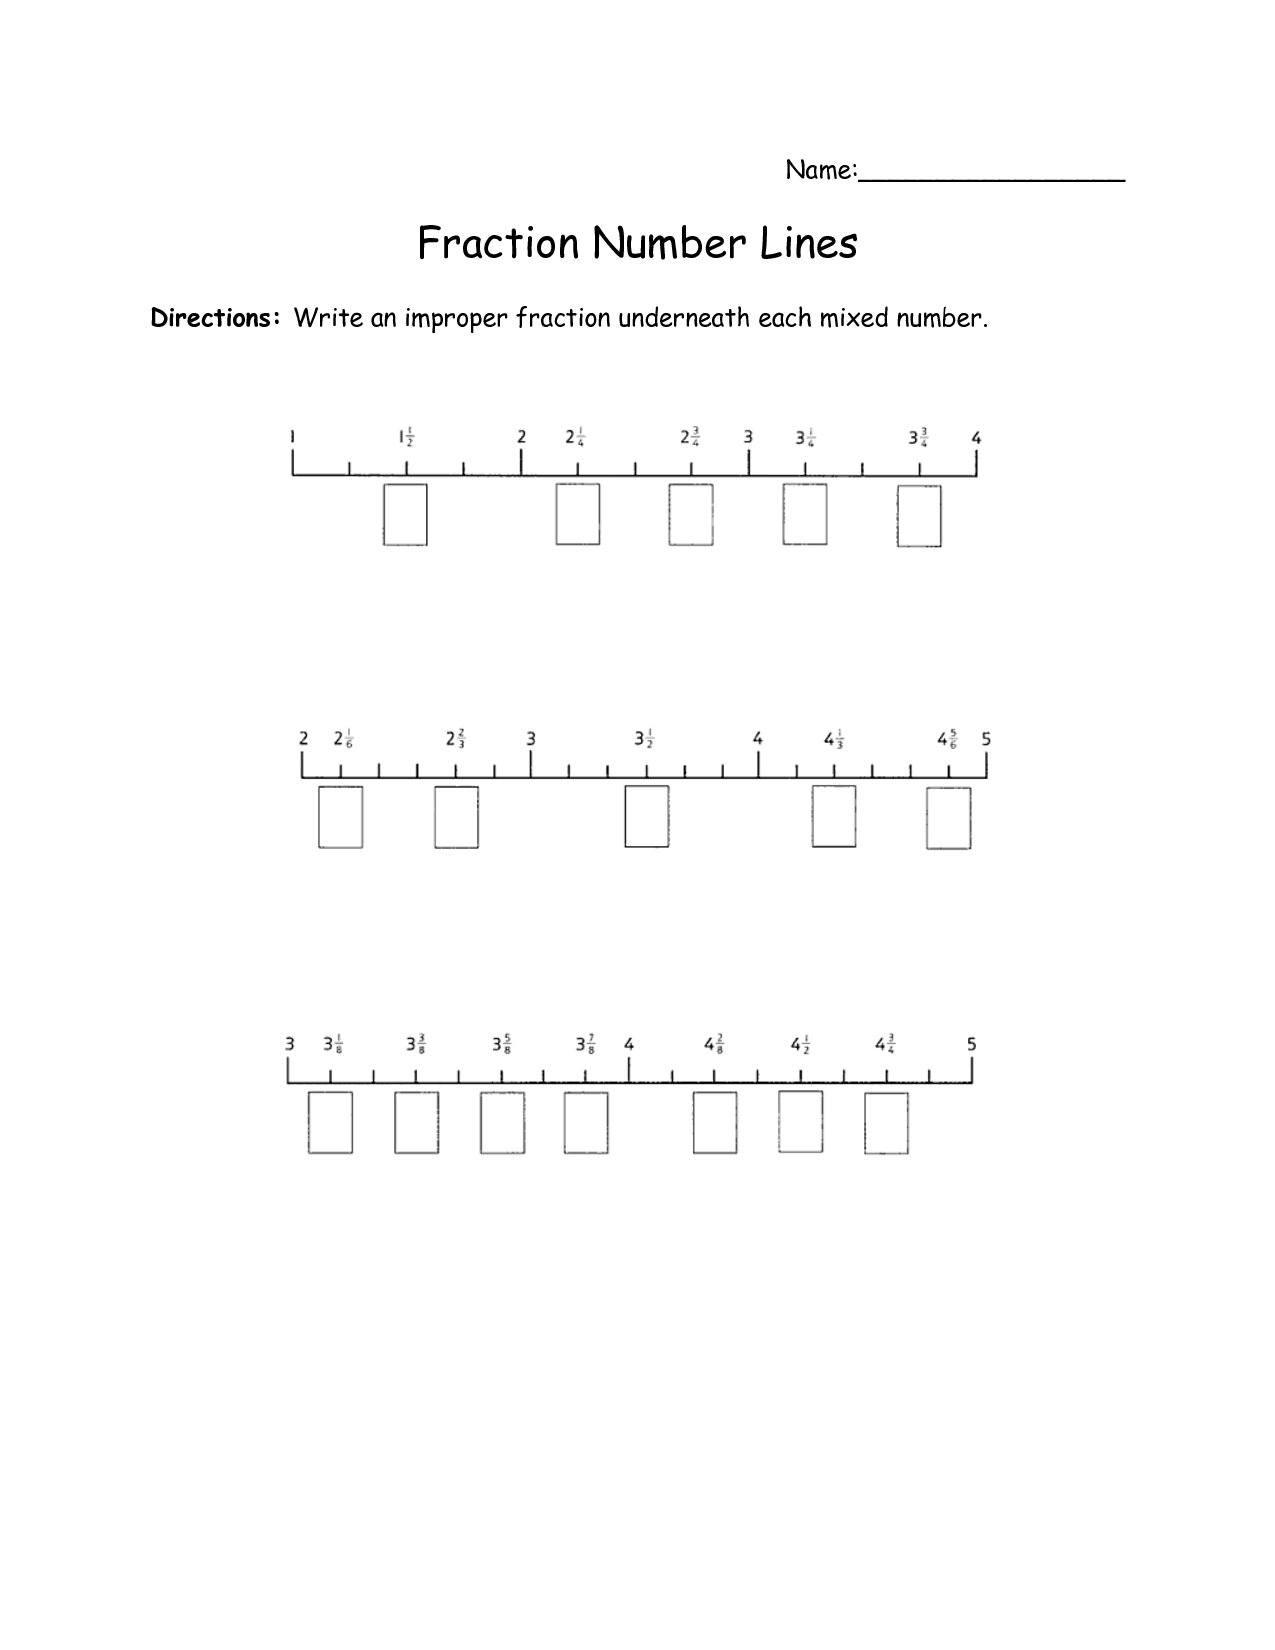 identifying-fractions-on-a-number-line-worksheet